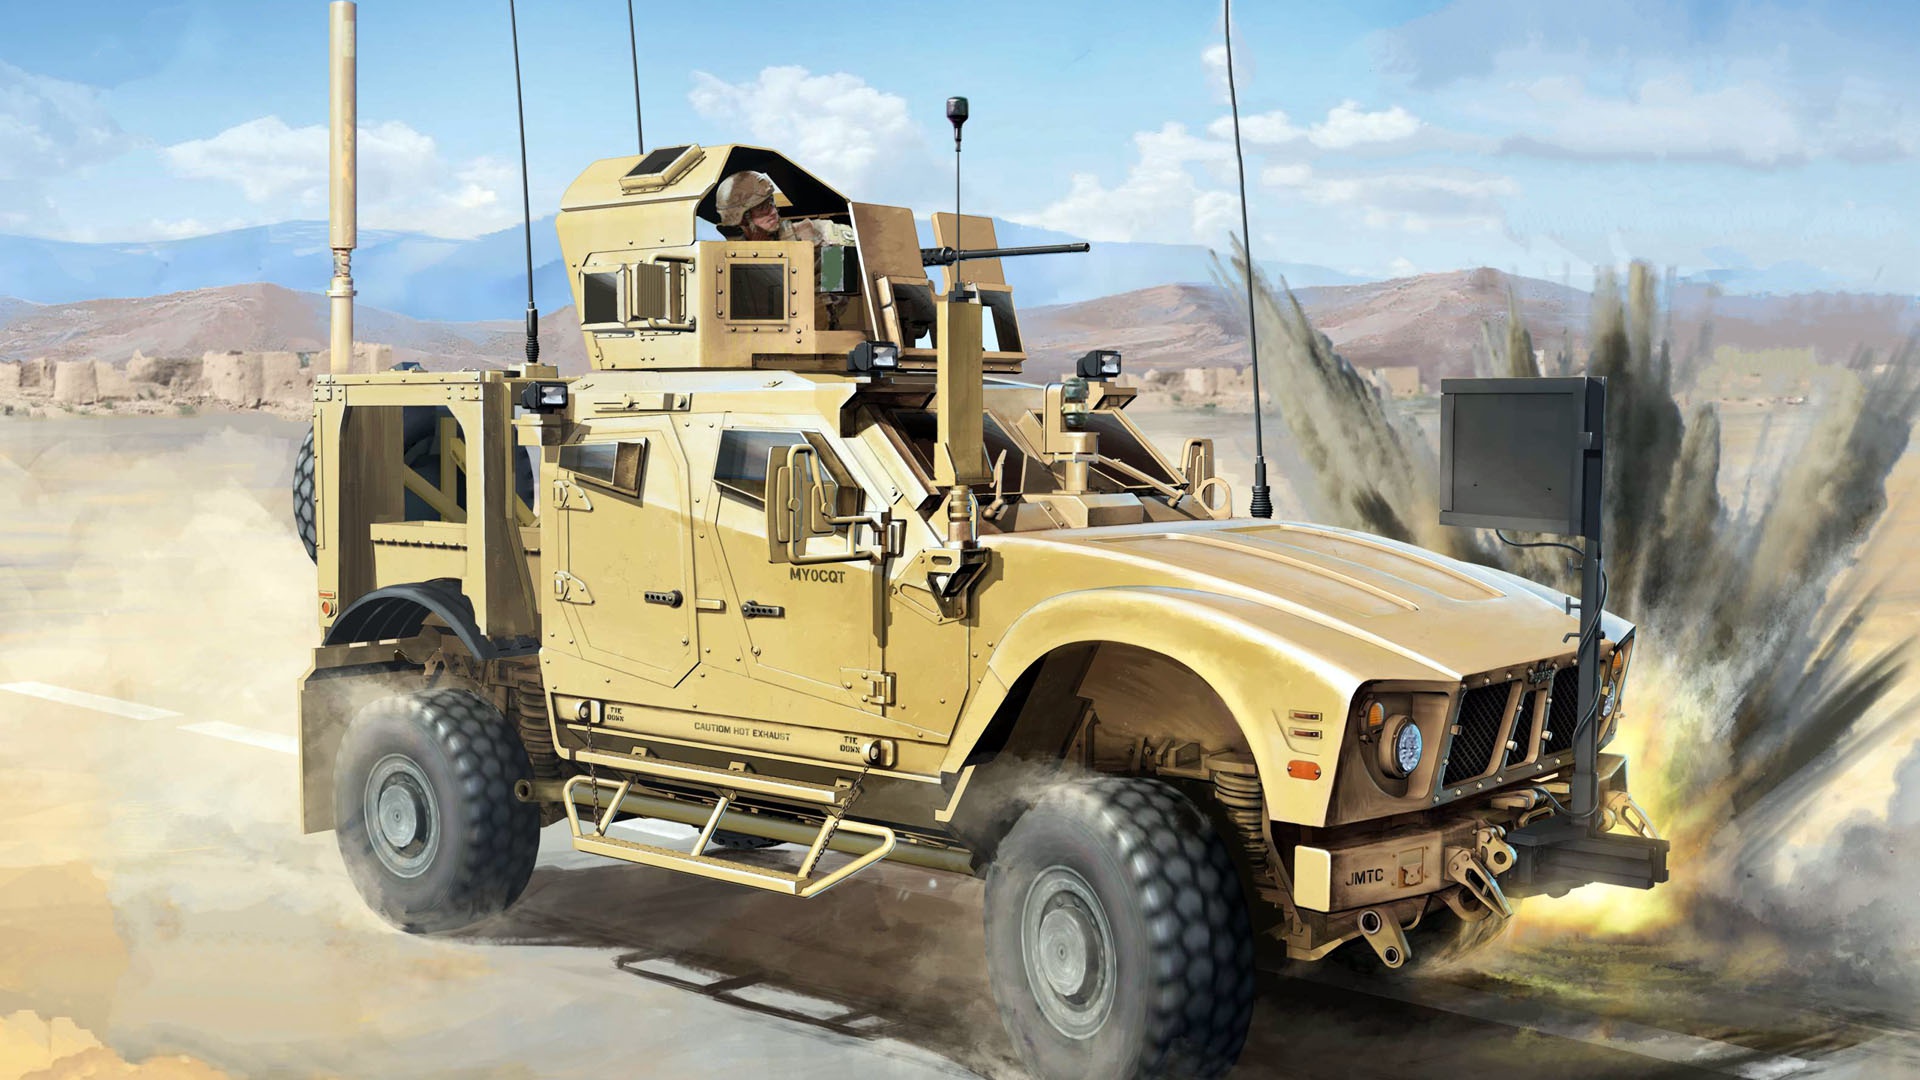 General 1920x1080 vehicle military artwork Oshkosh M-ATV military vehicle MRAP explosion Boxart bombs USA army armor